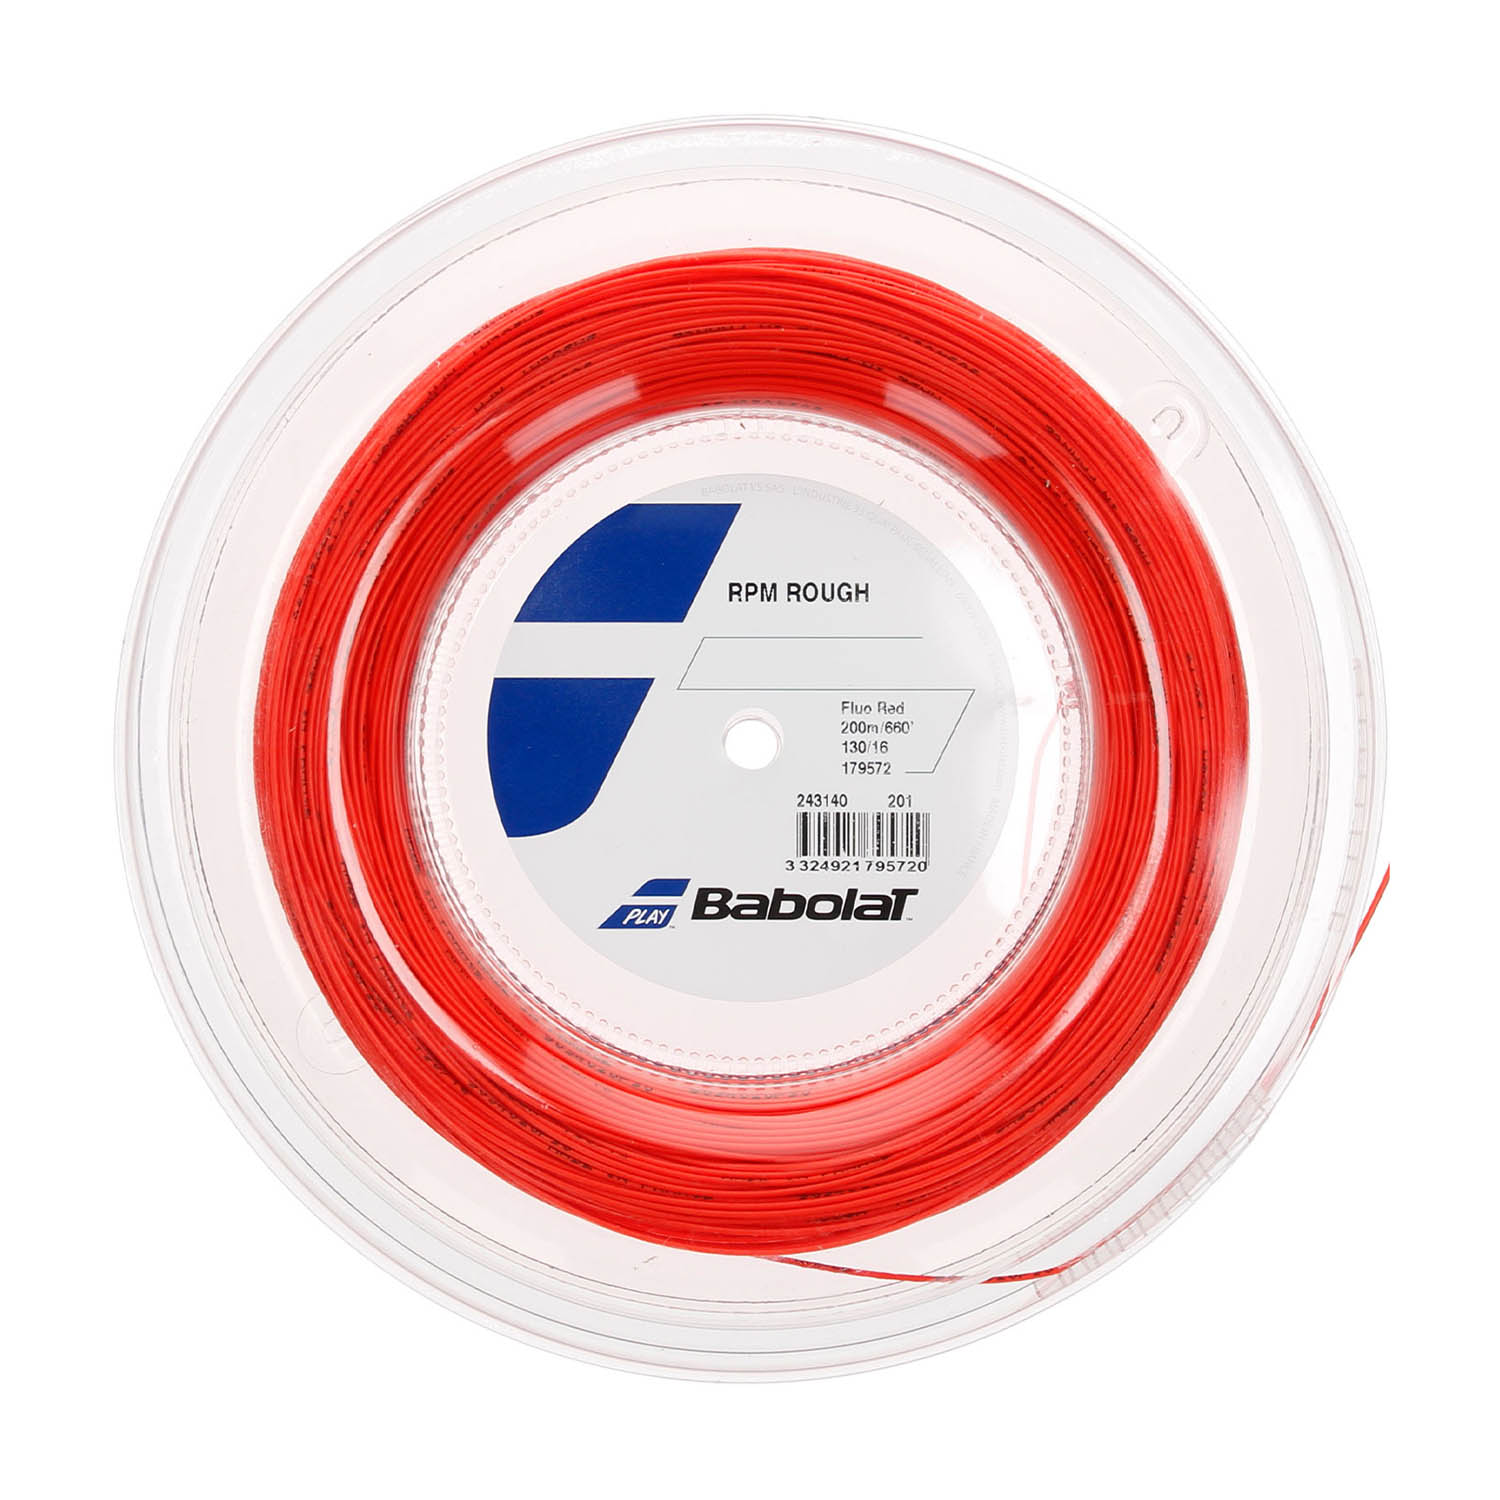 Babolat RPM Rough 1.30 Bobina 200 m - Red Fluo